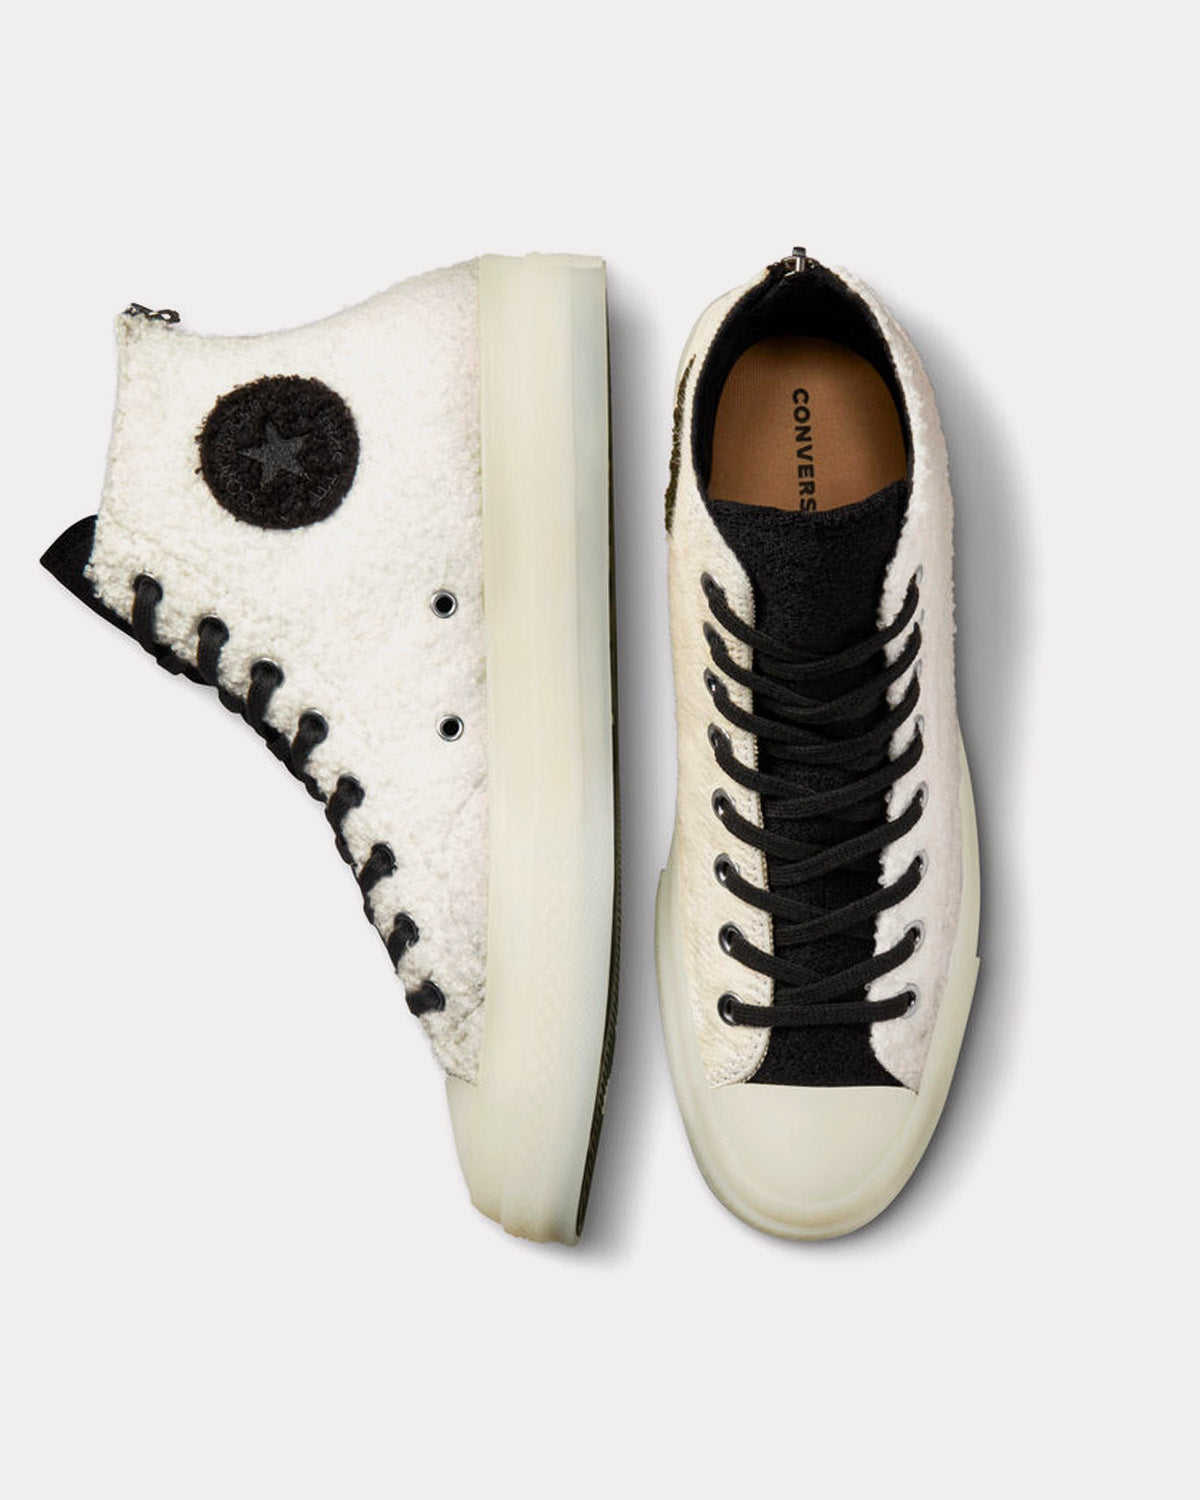 Converse - x CLOT Chuck 70 White / Black / Grey High Top Sneakers